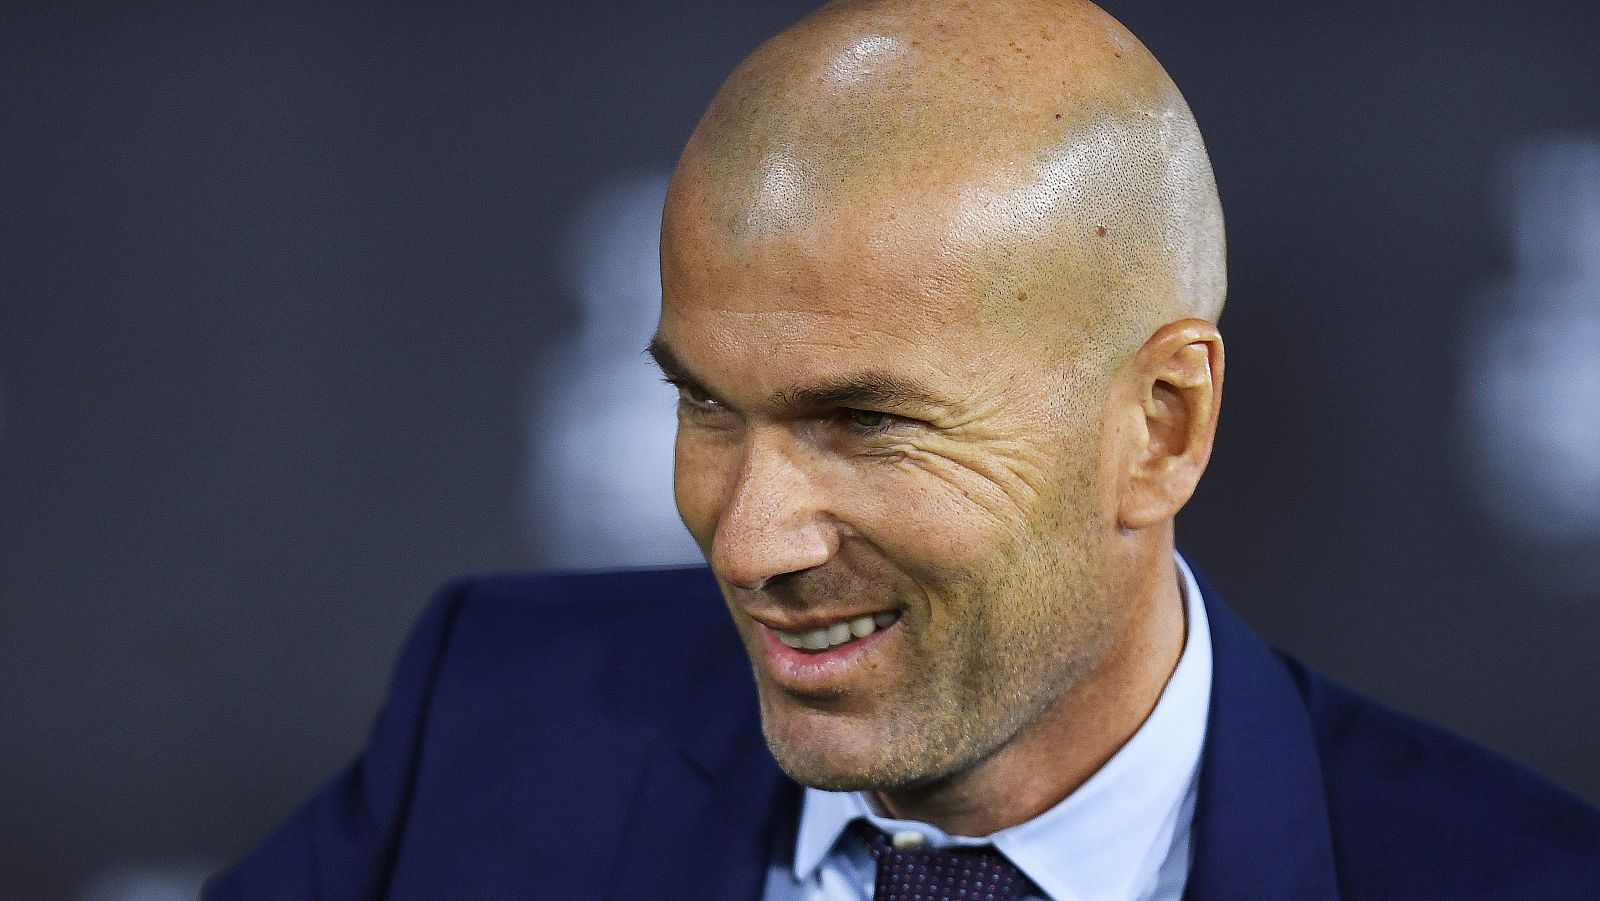 El entrenador francés del Real Madrid, Zinedine Zidane